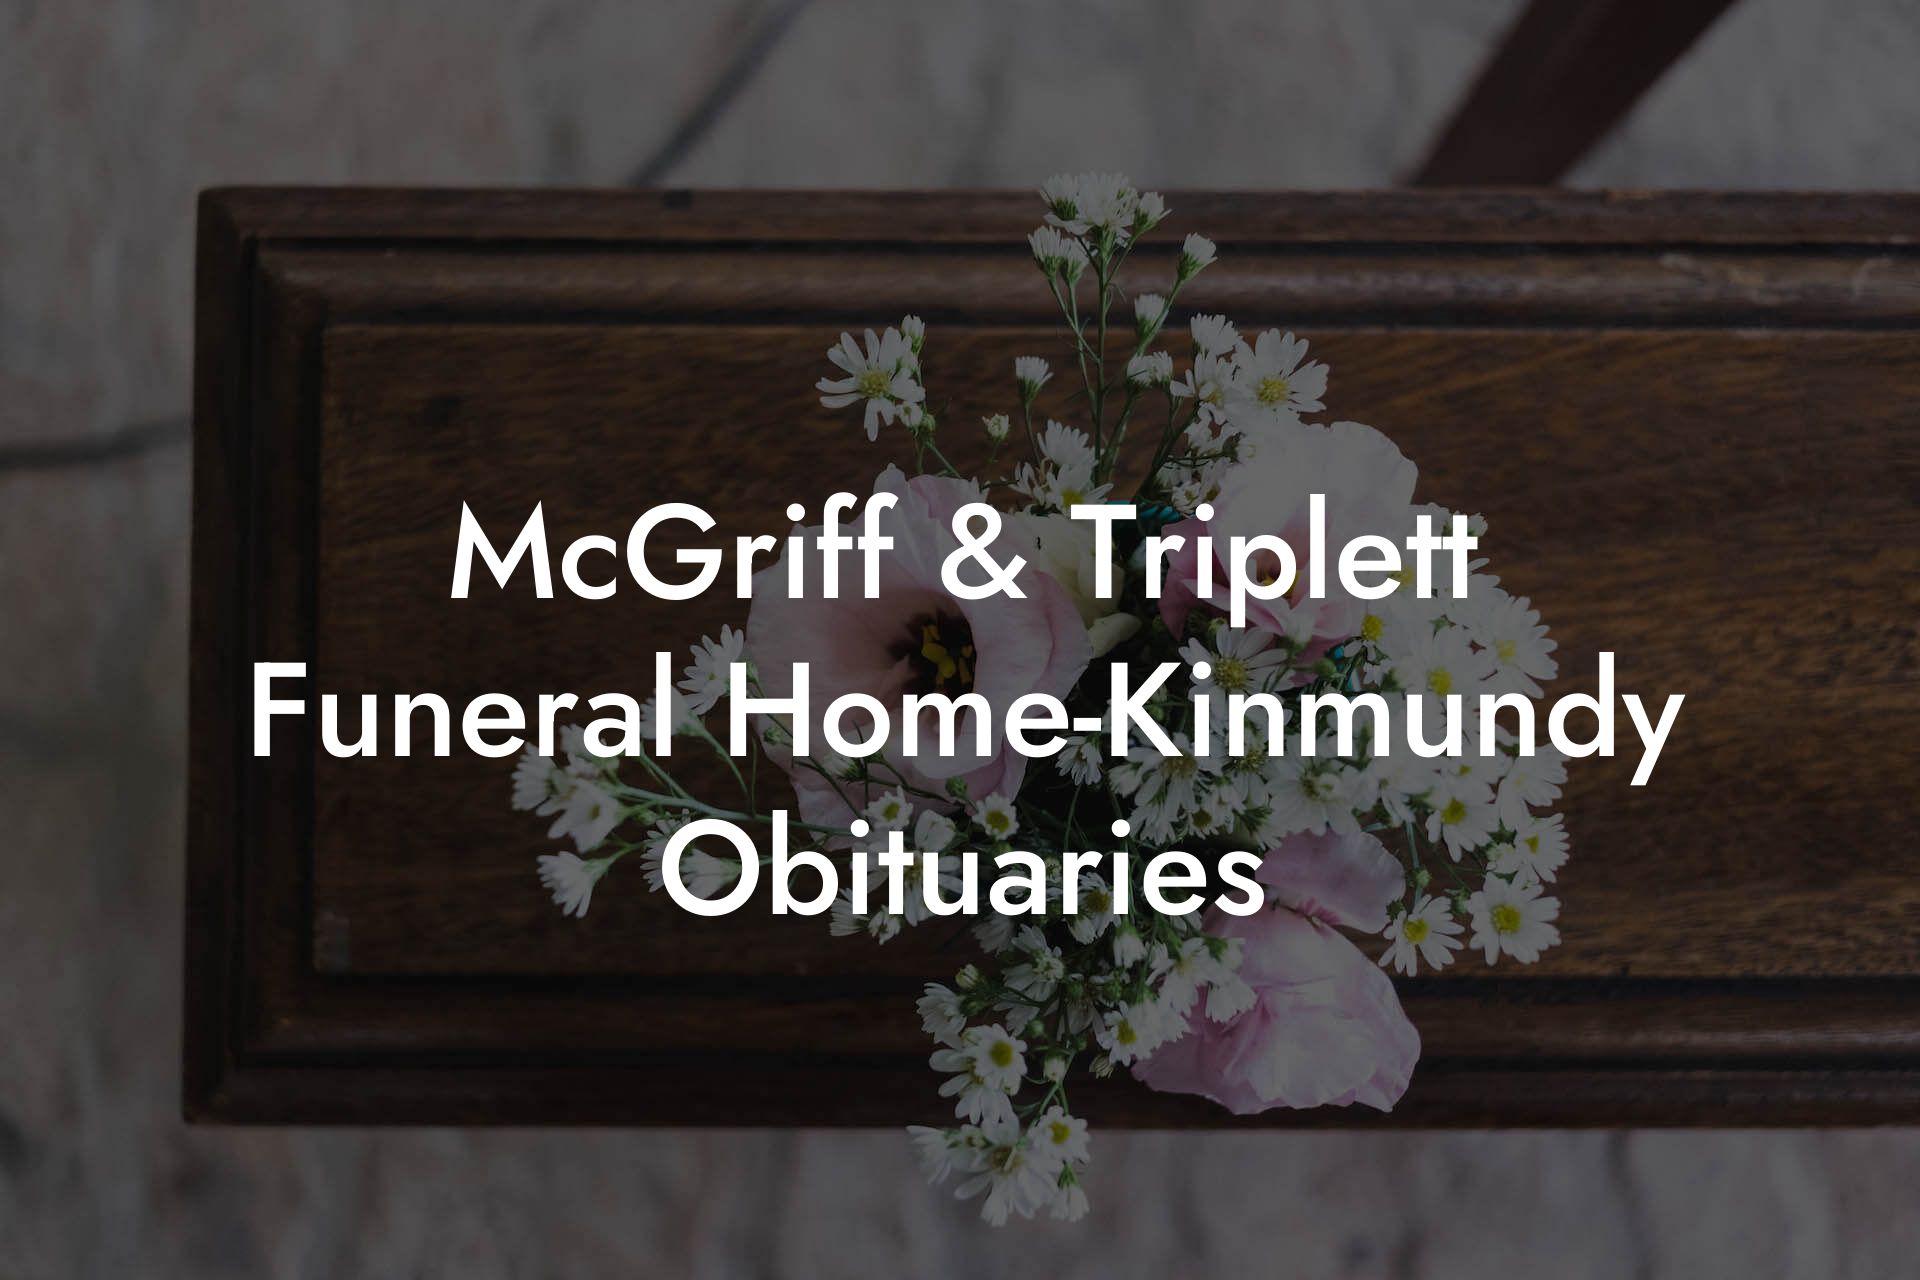 McGriff & Triplett Funeral Home-Kinmundy Obituaries